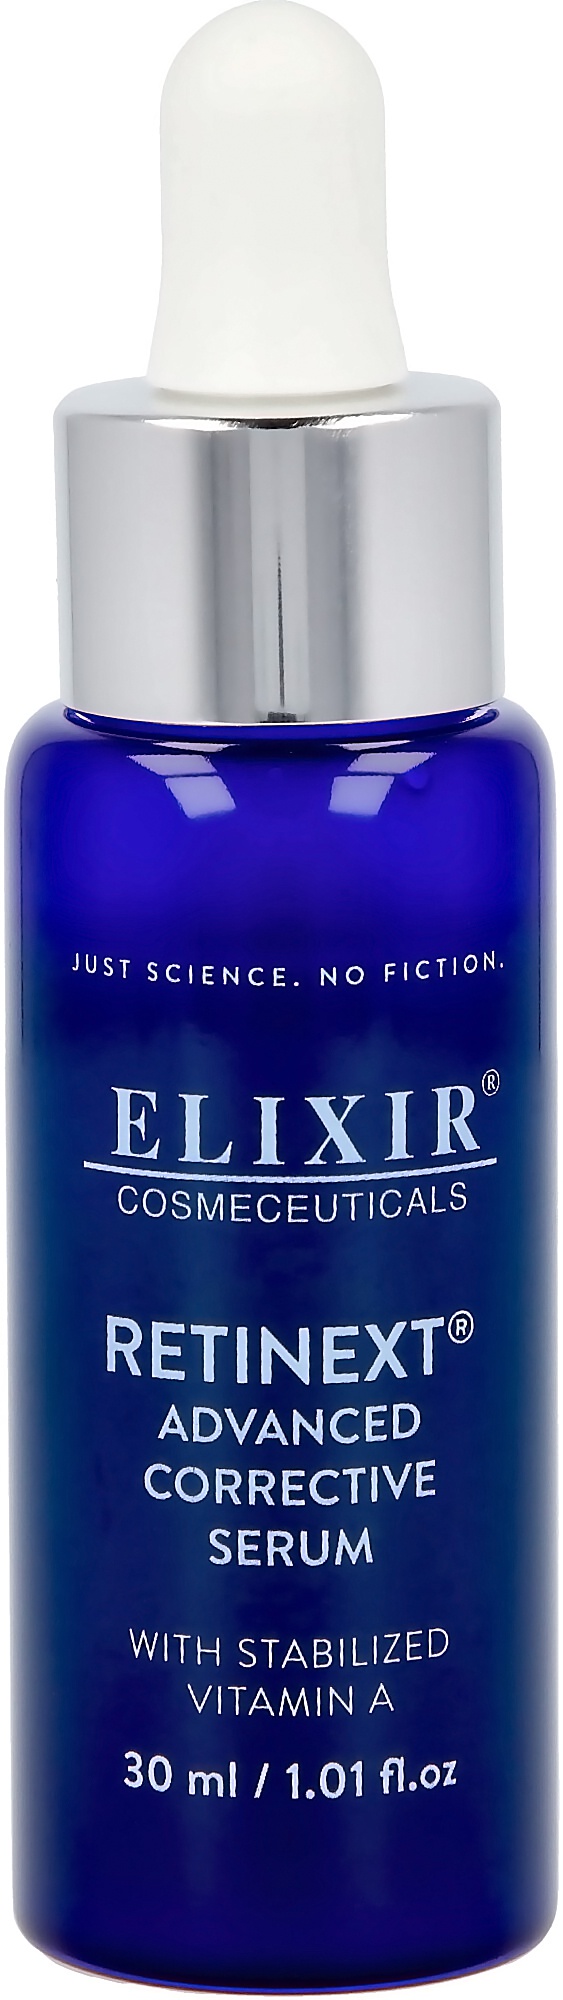 ELIXIR COSMECEUTICALS Retinext Advanced Corrective Serum